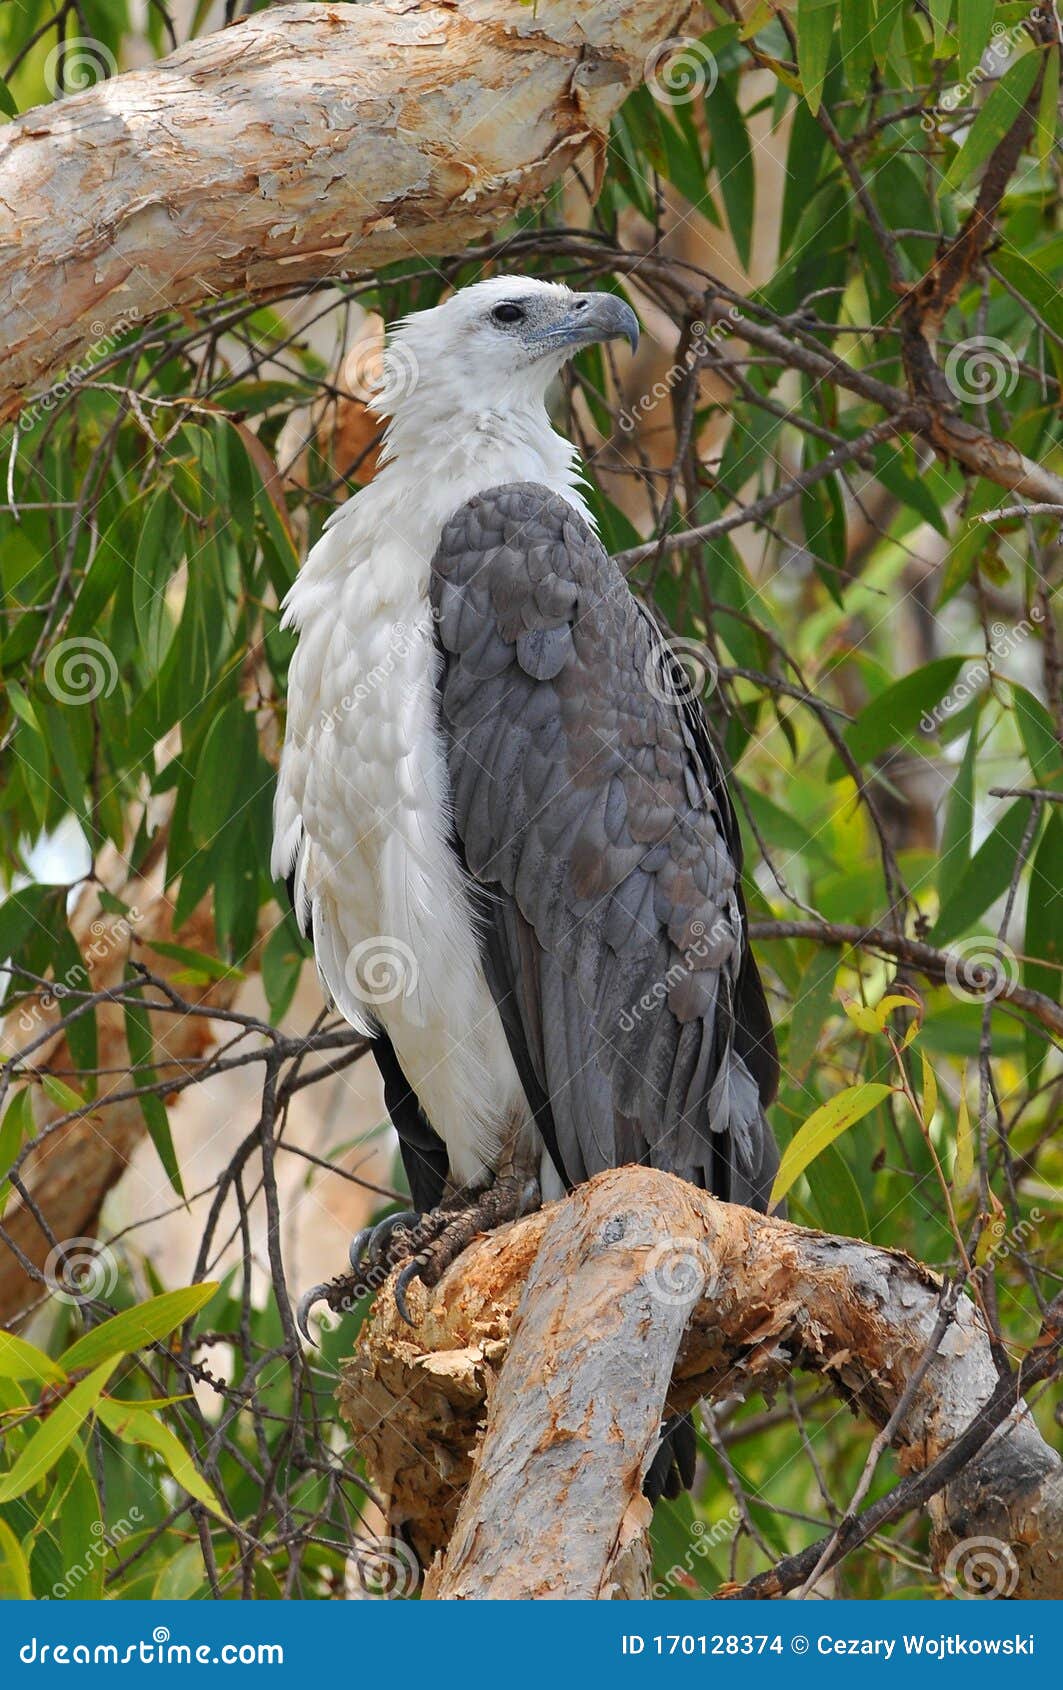 the white bellied sea eagle haliaeetus leucogaster, also known as the white breasted sea eagle, is a large diurnal bird of prey